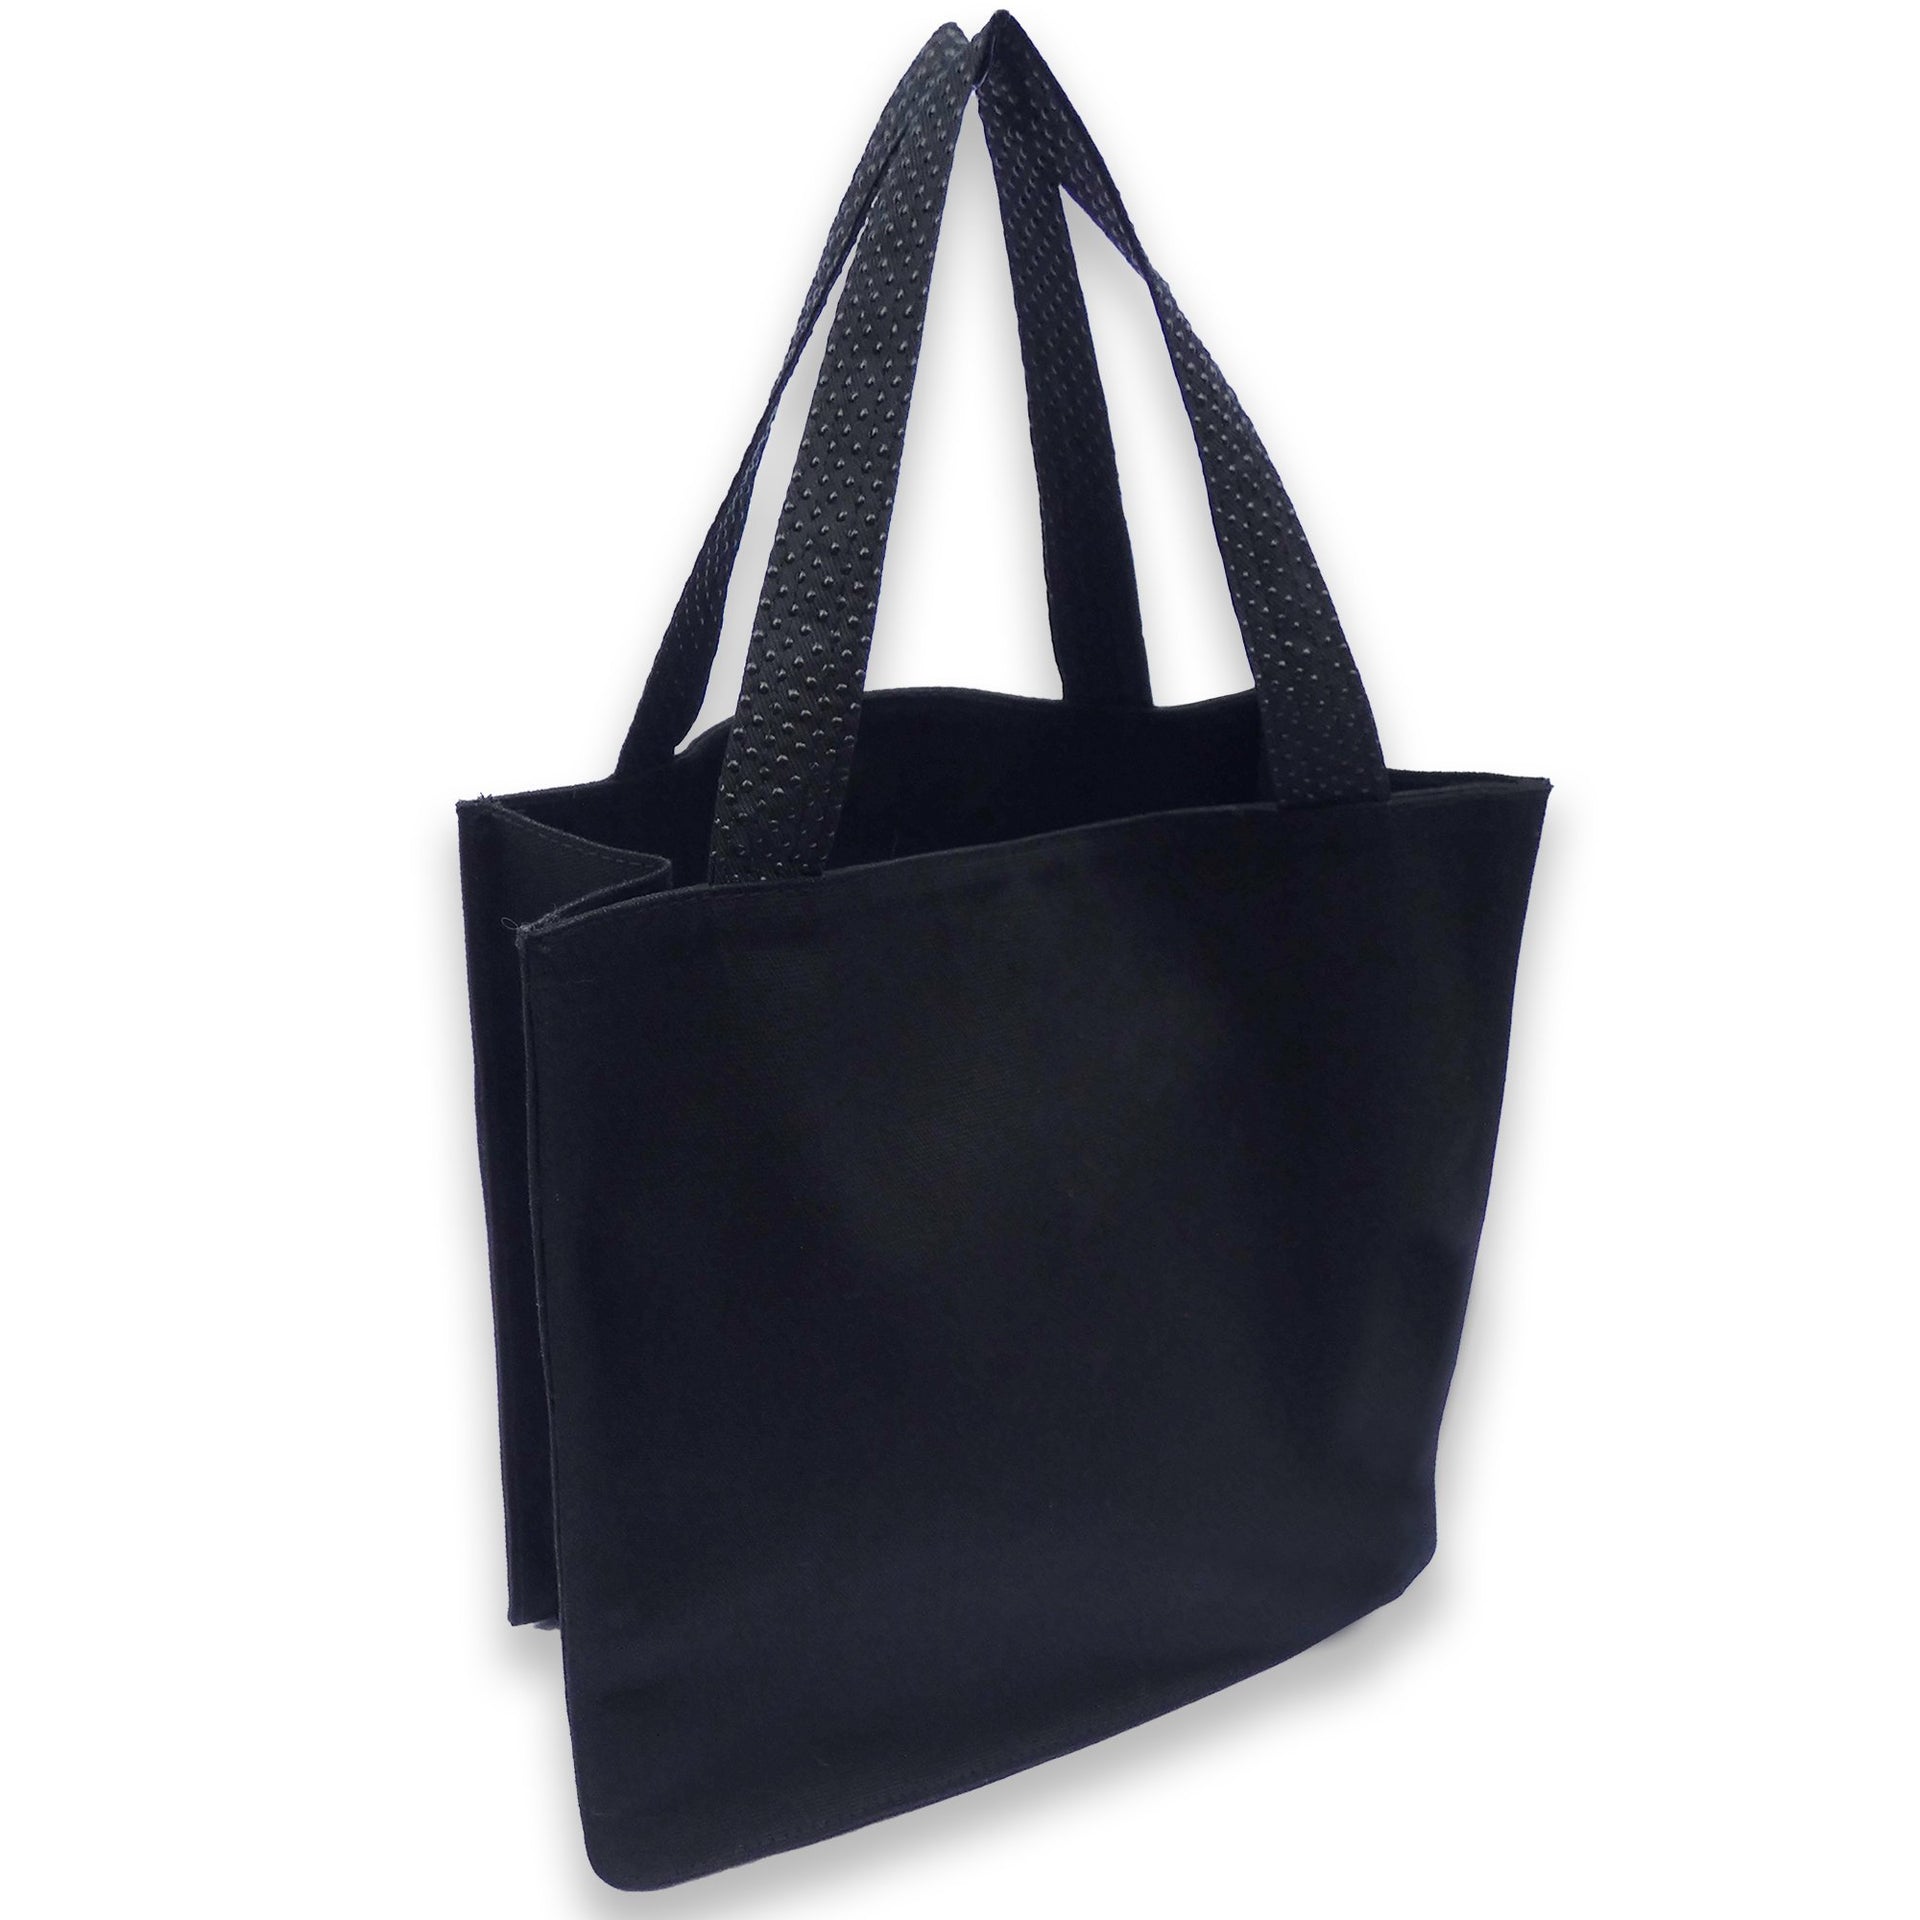 Travel Tote Bag for Adult Bibs - Classy Pal Tote Bag